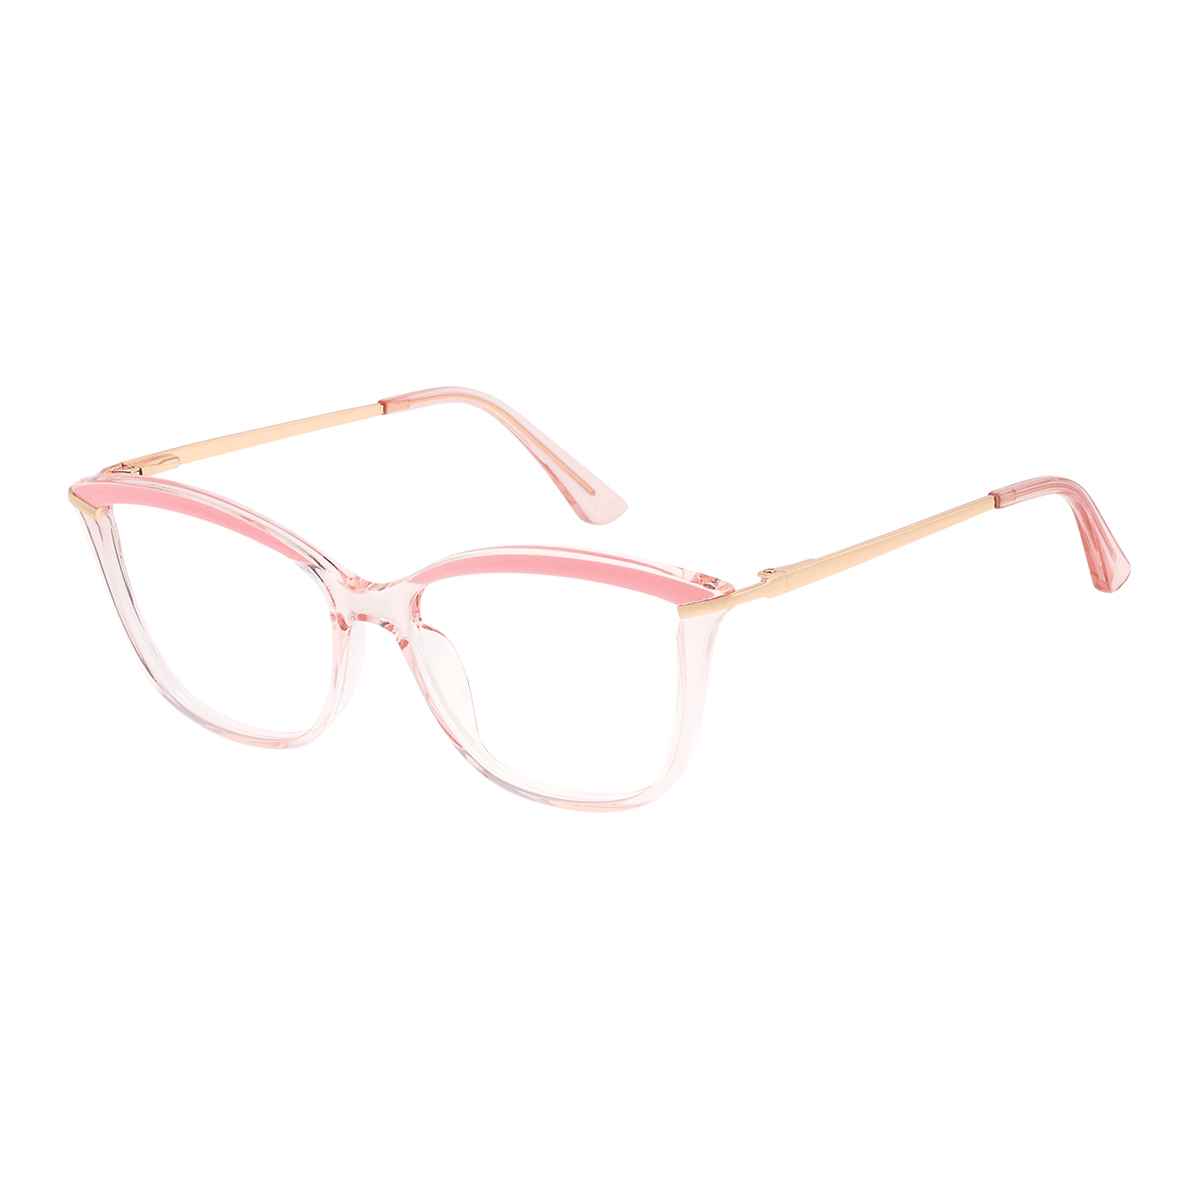 Dai - Cat-eye Pink Reading Glasses for Women